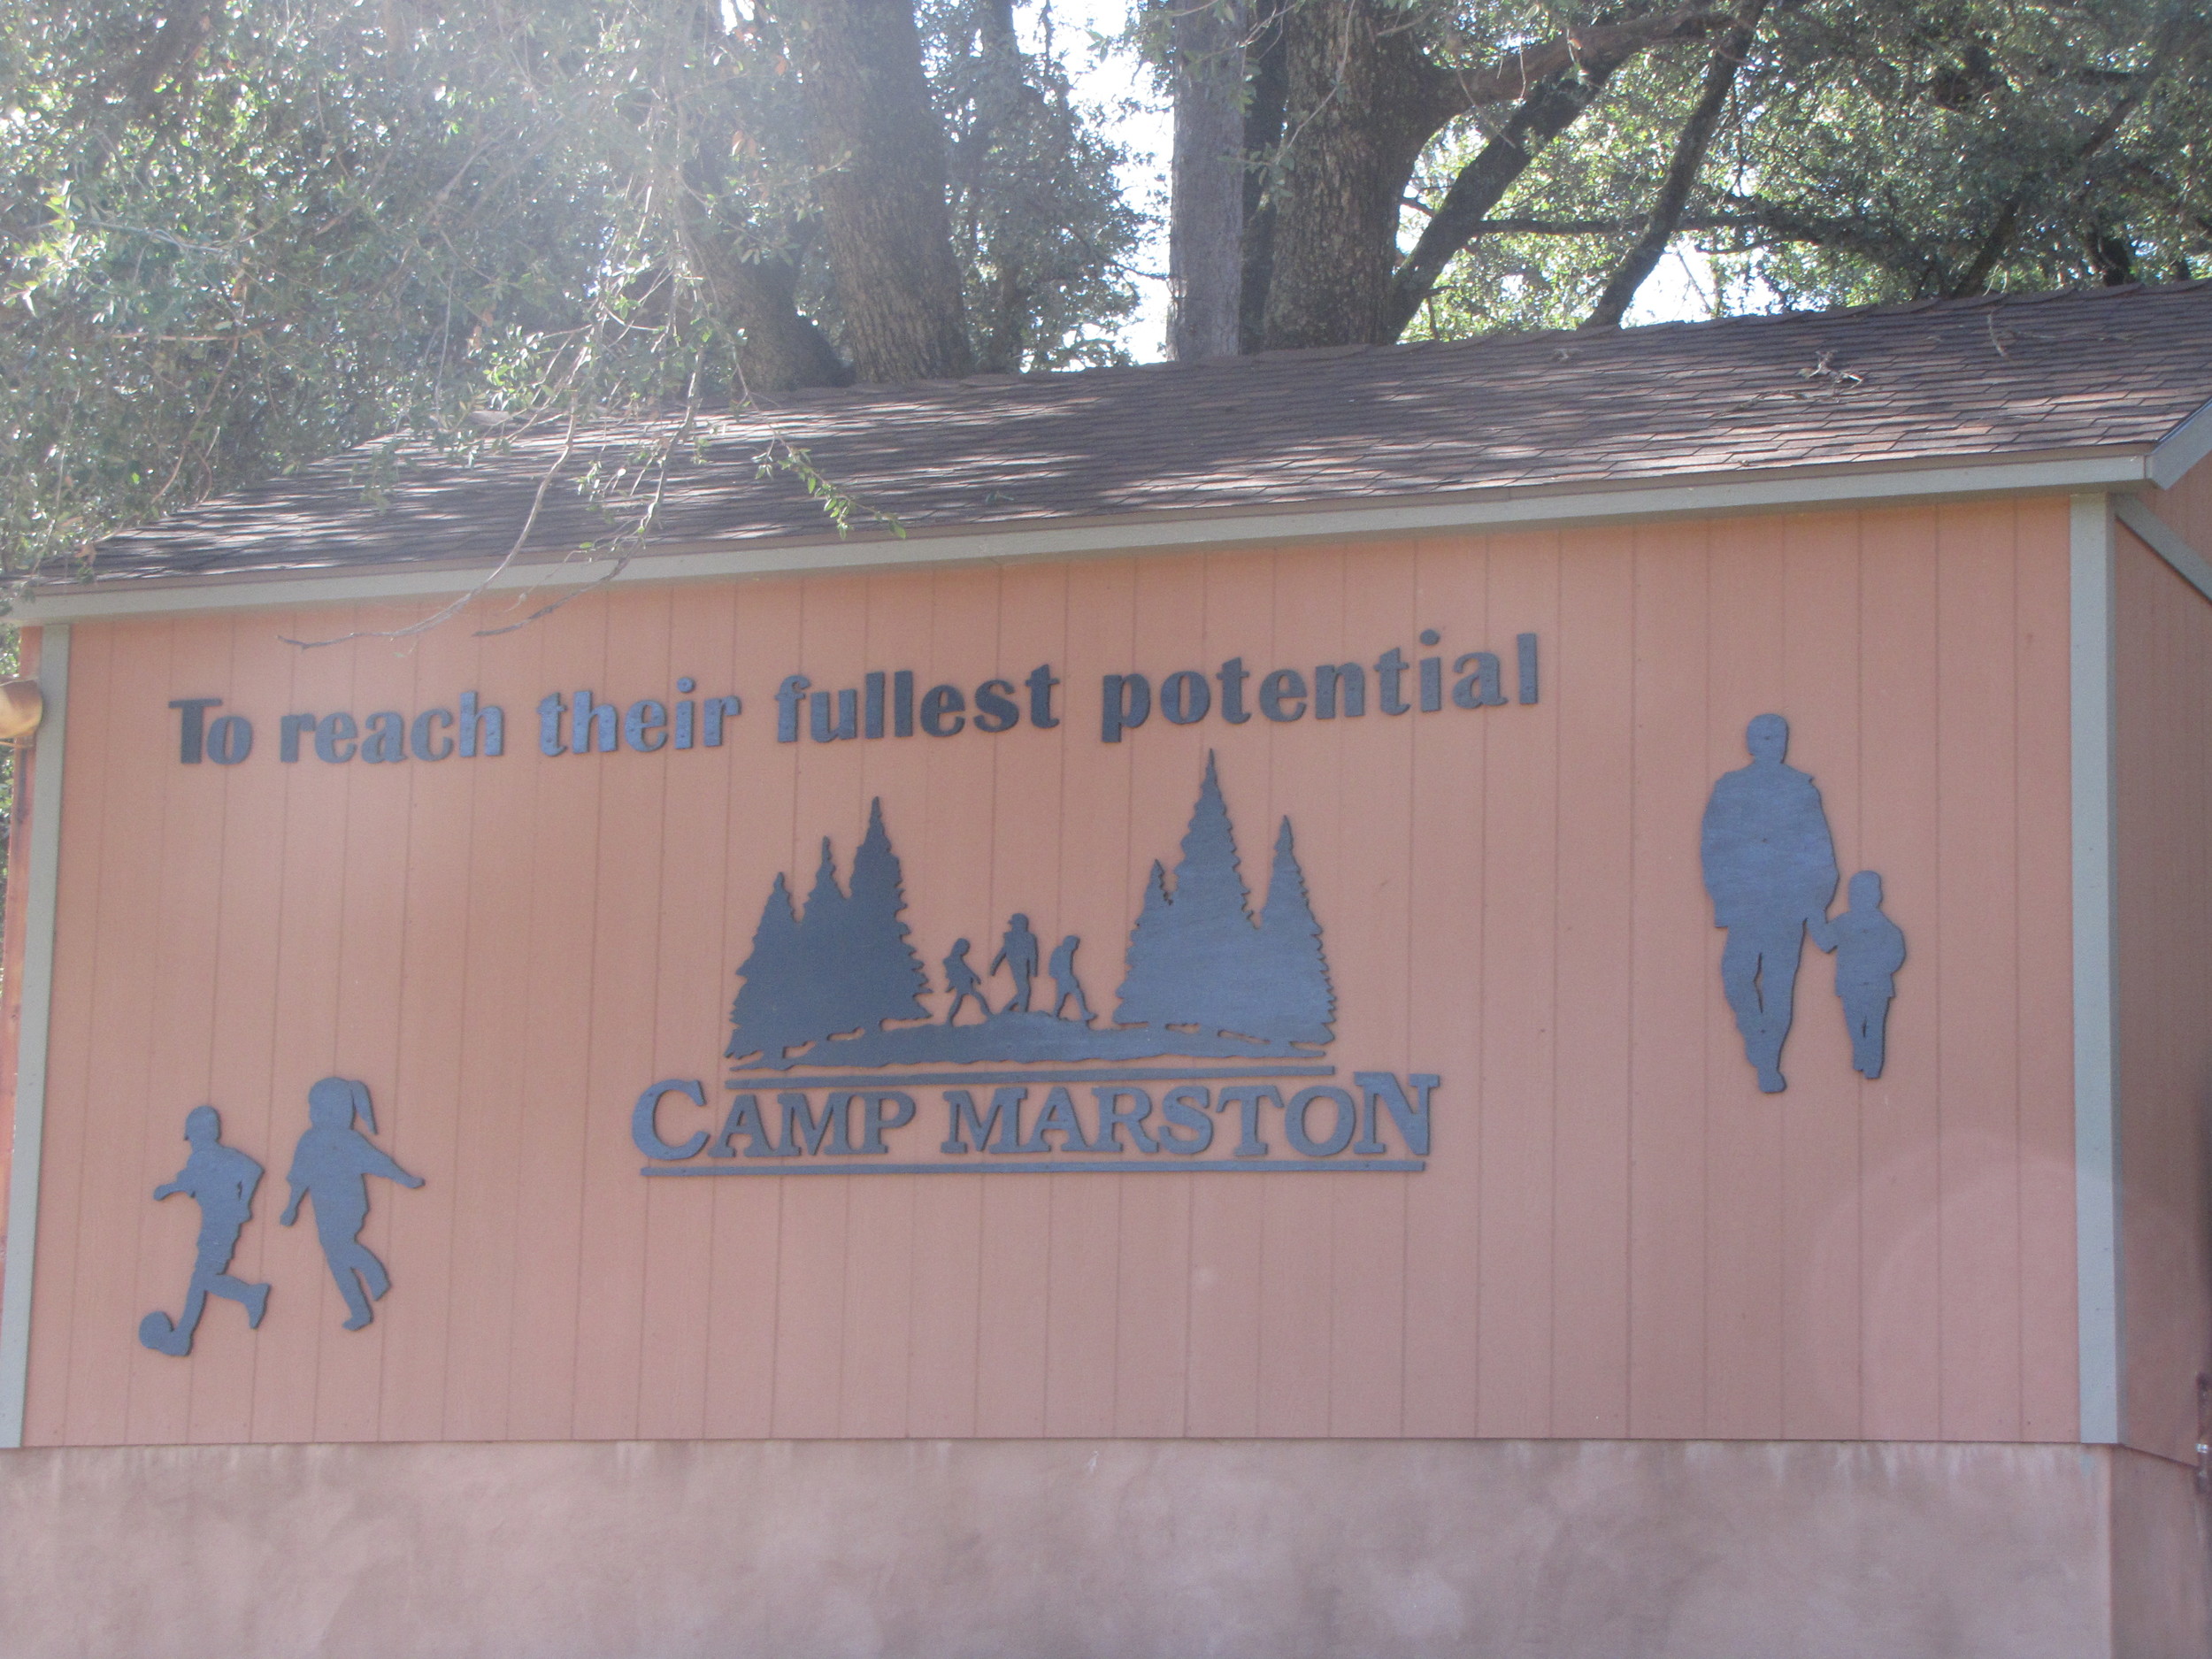 Camp Marston